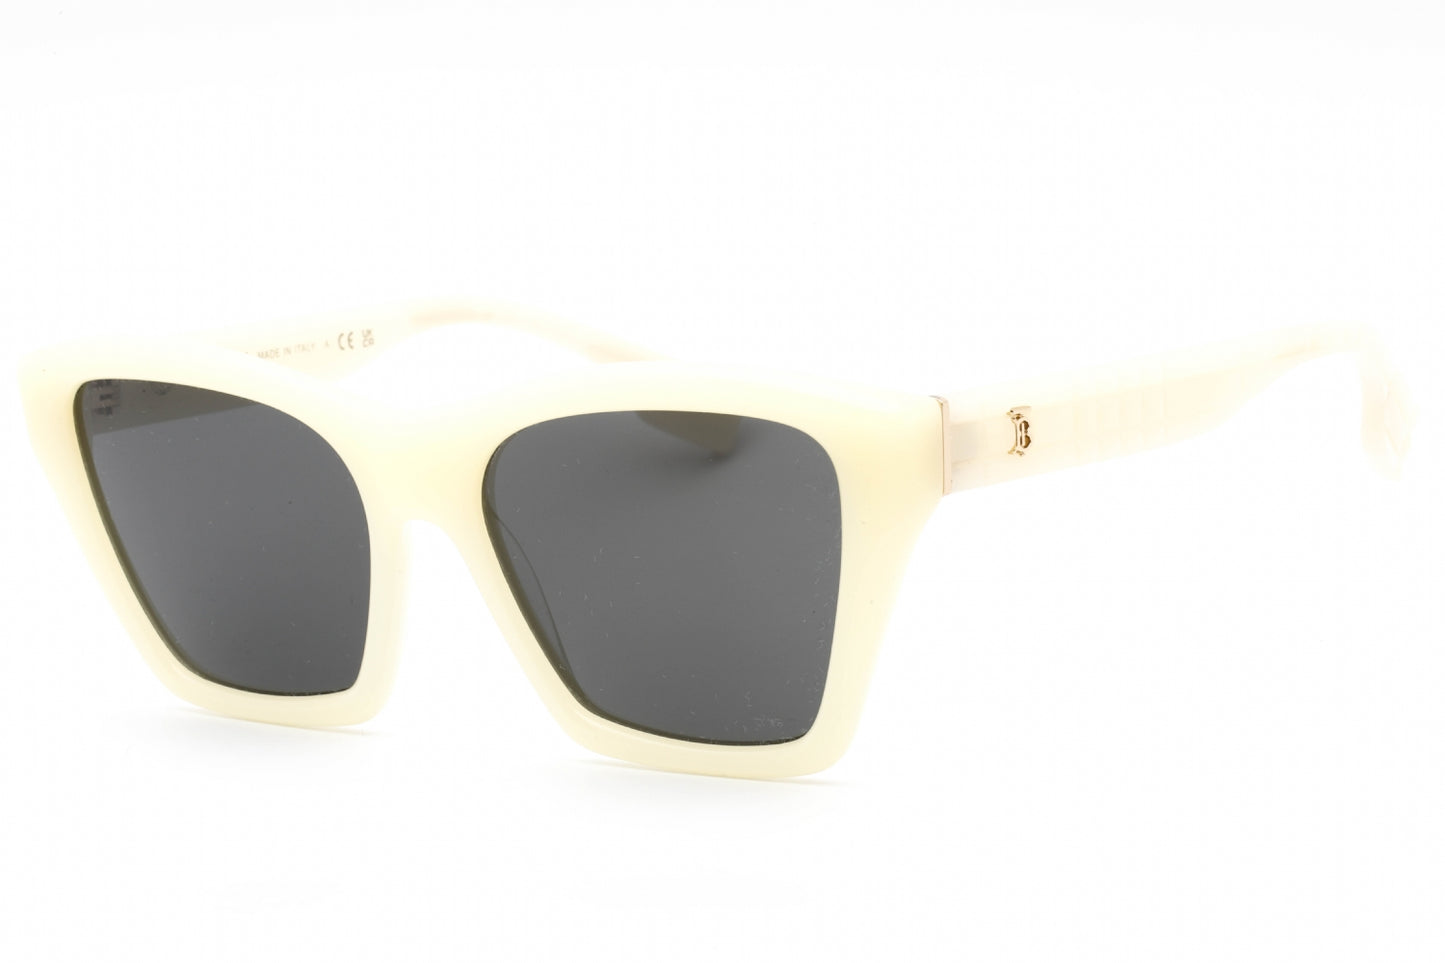 Burberry 0BE4391-406587 54mm New Sunglasses